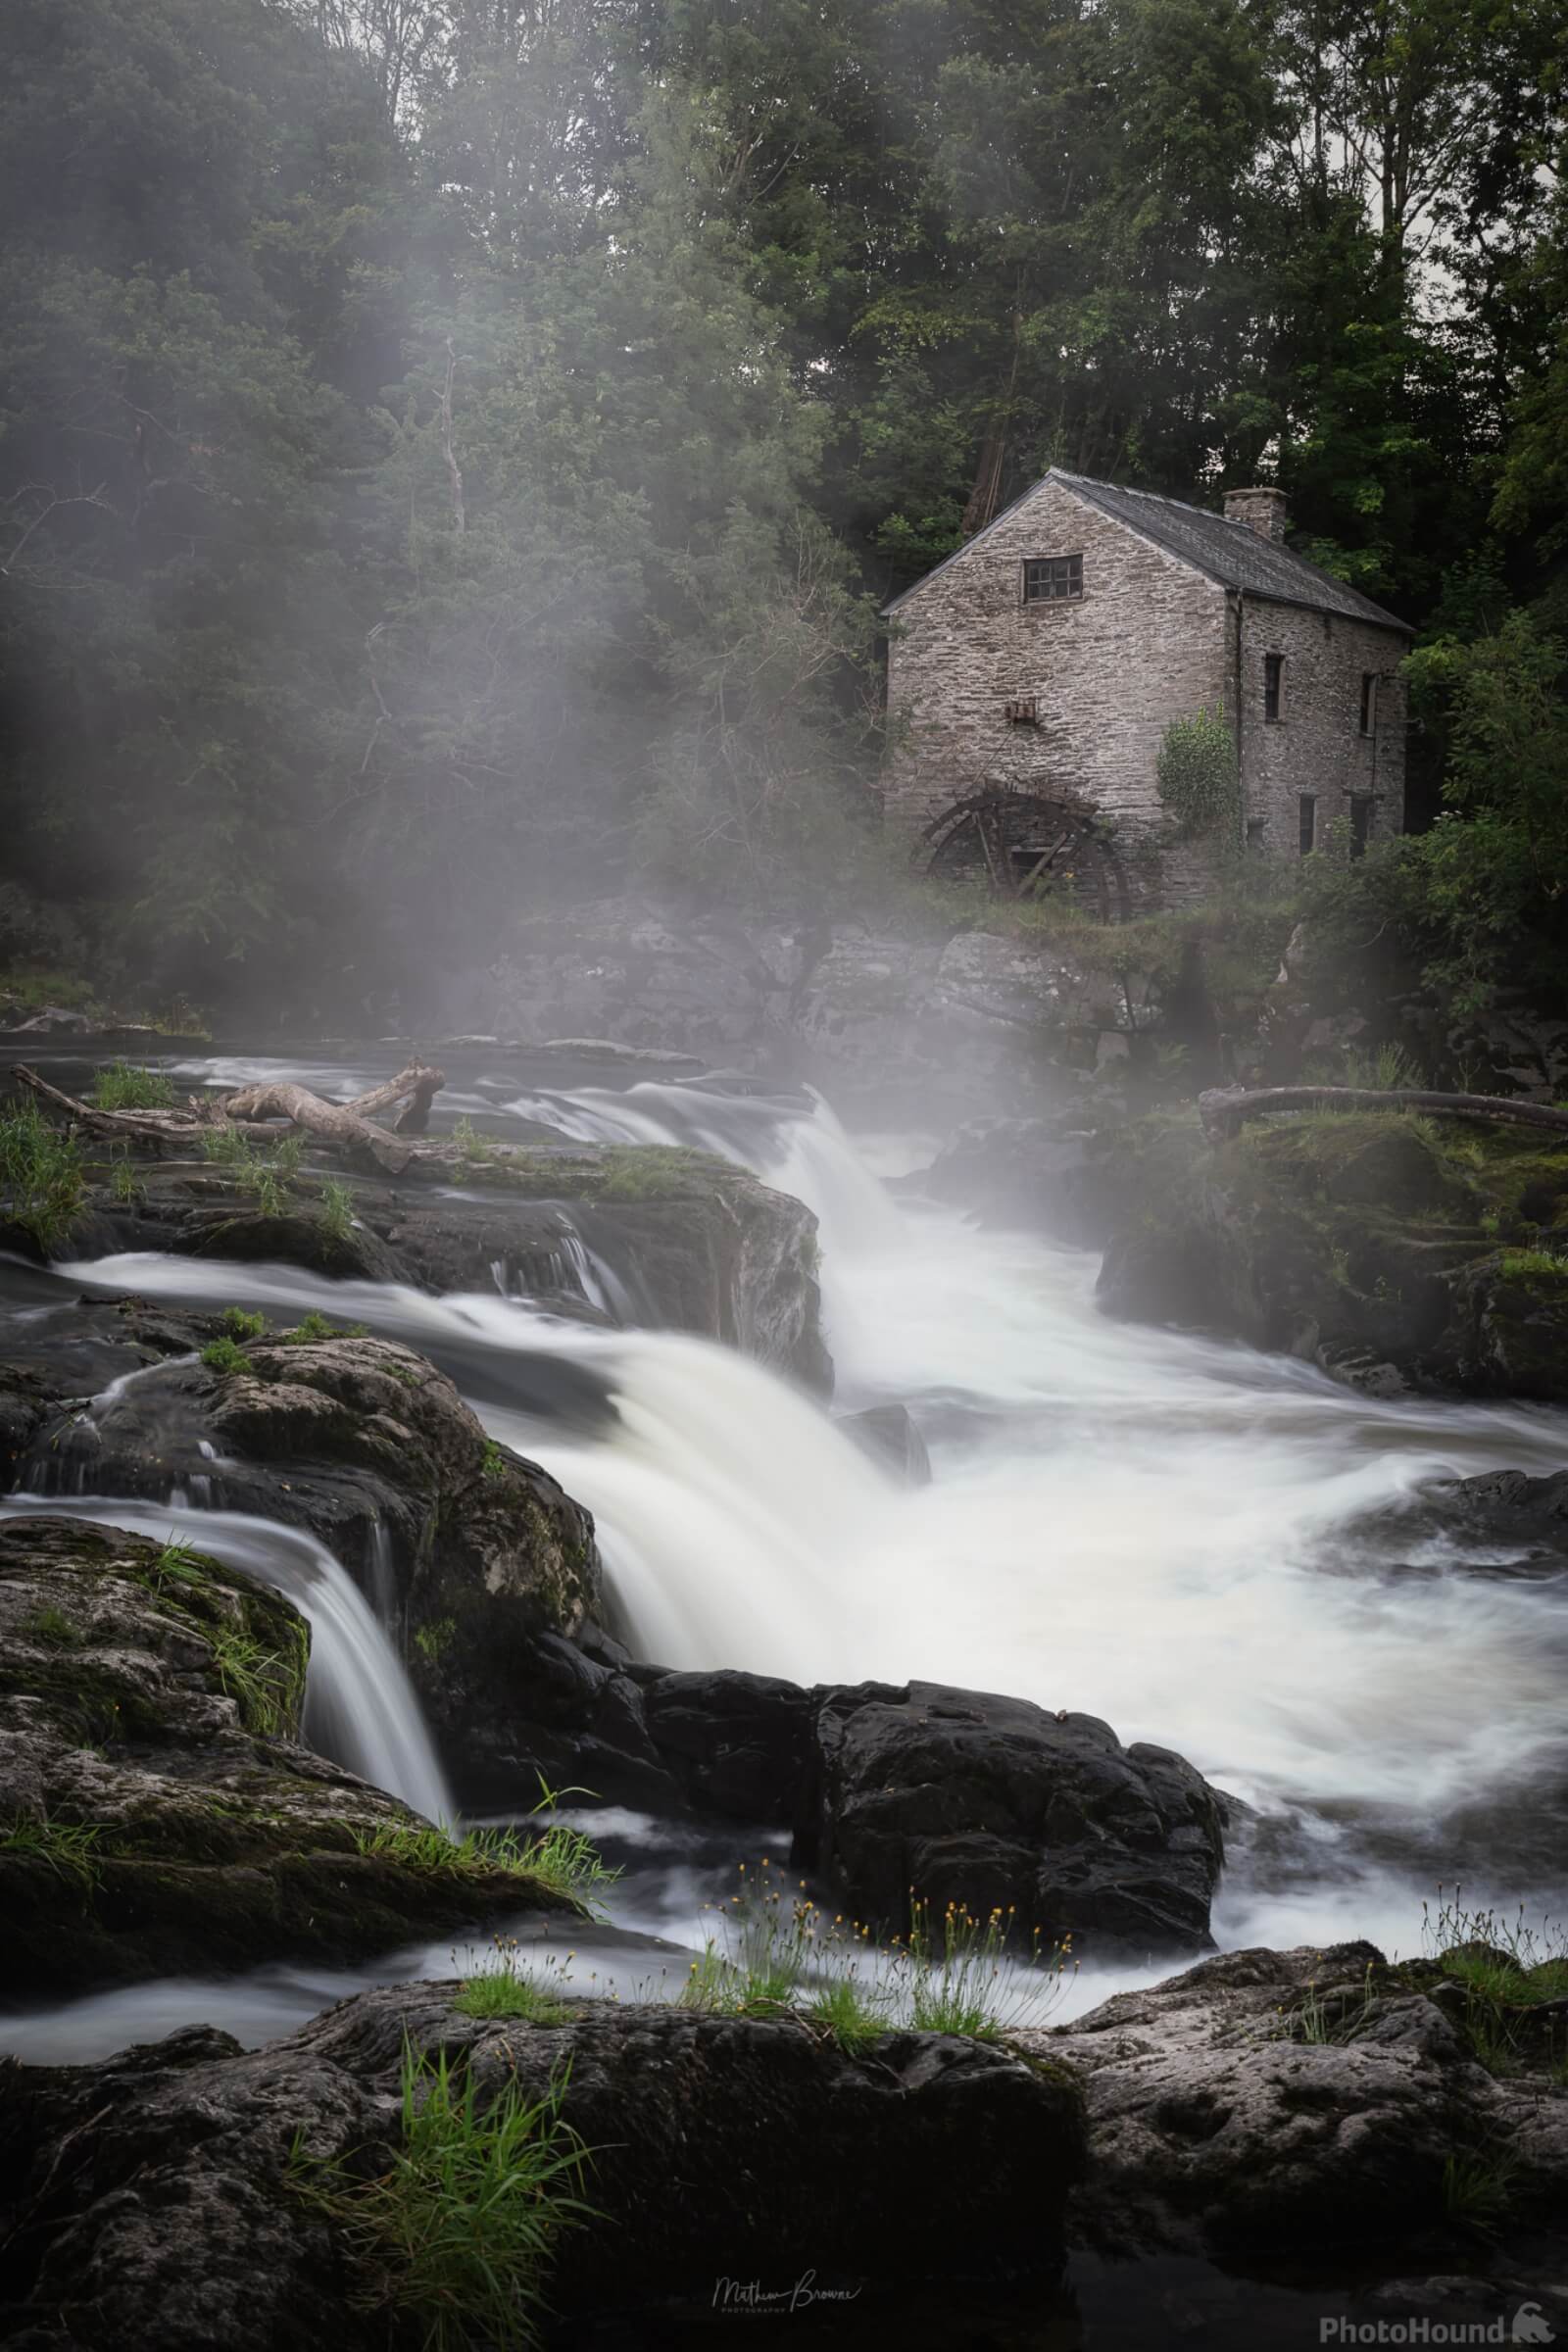 Image of Cenarth Falls by Mathew Browne